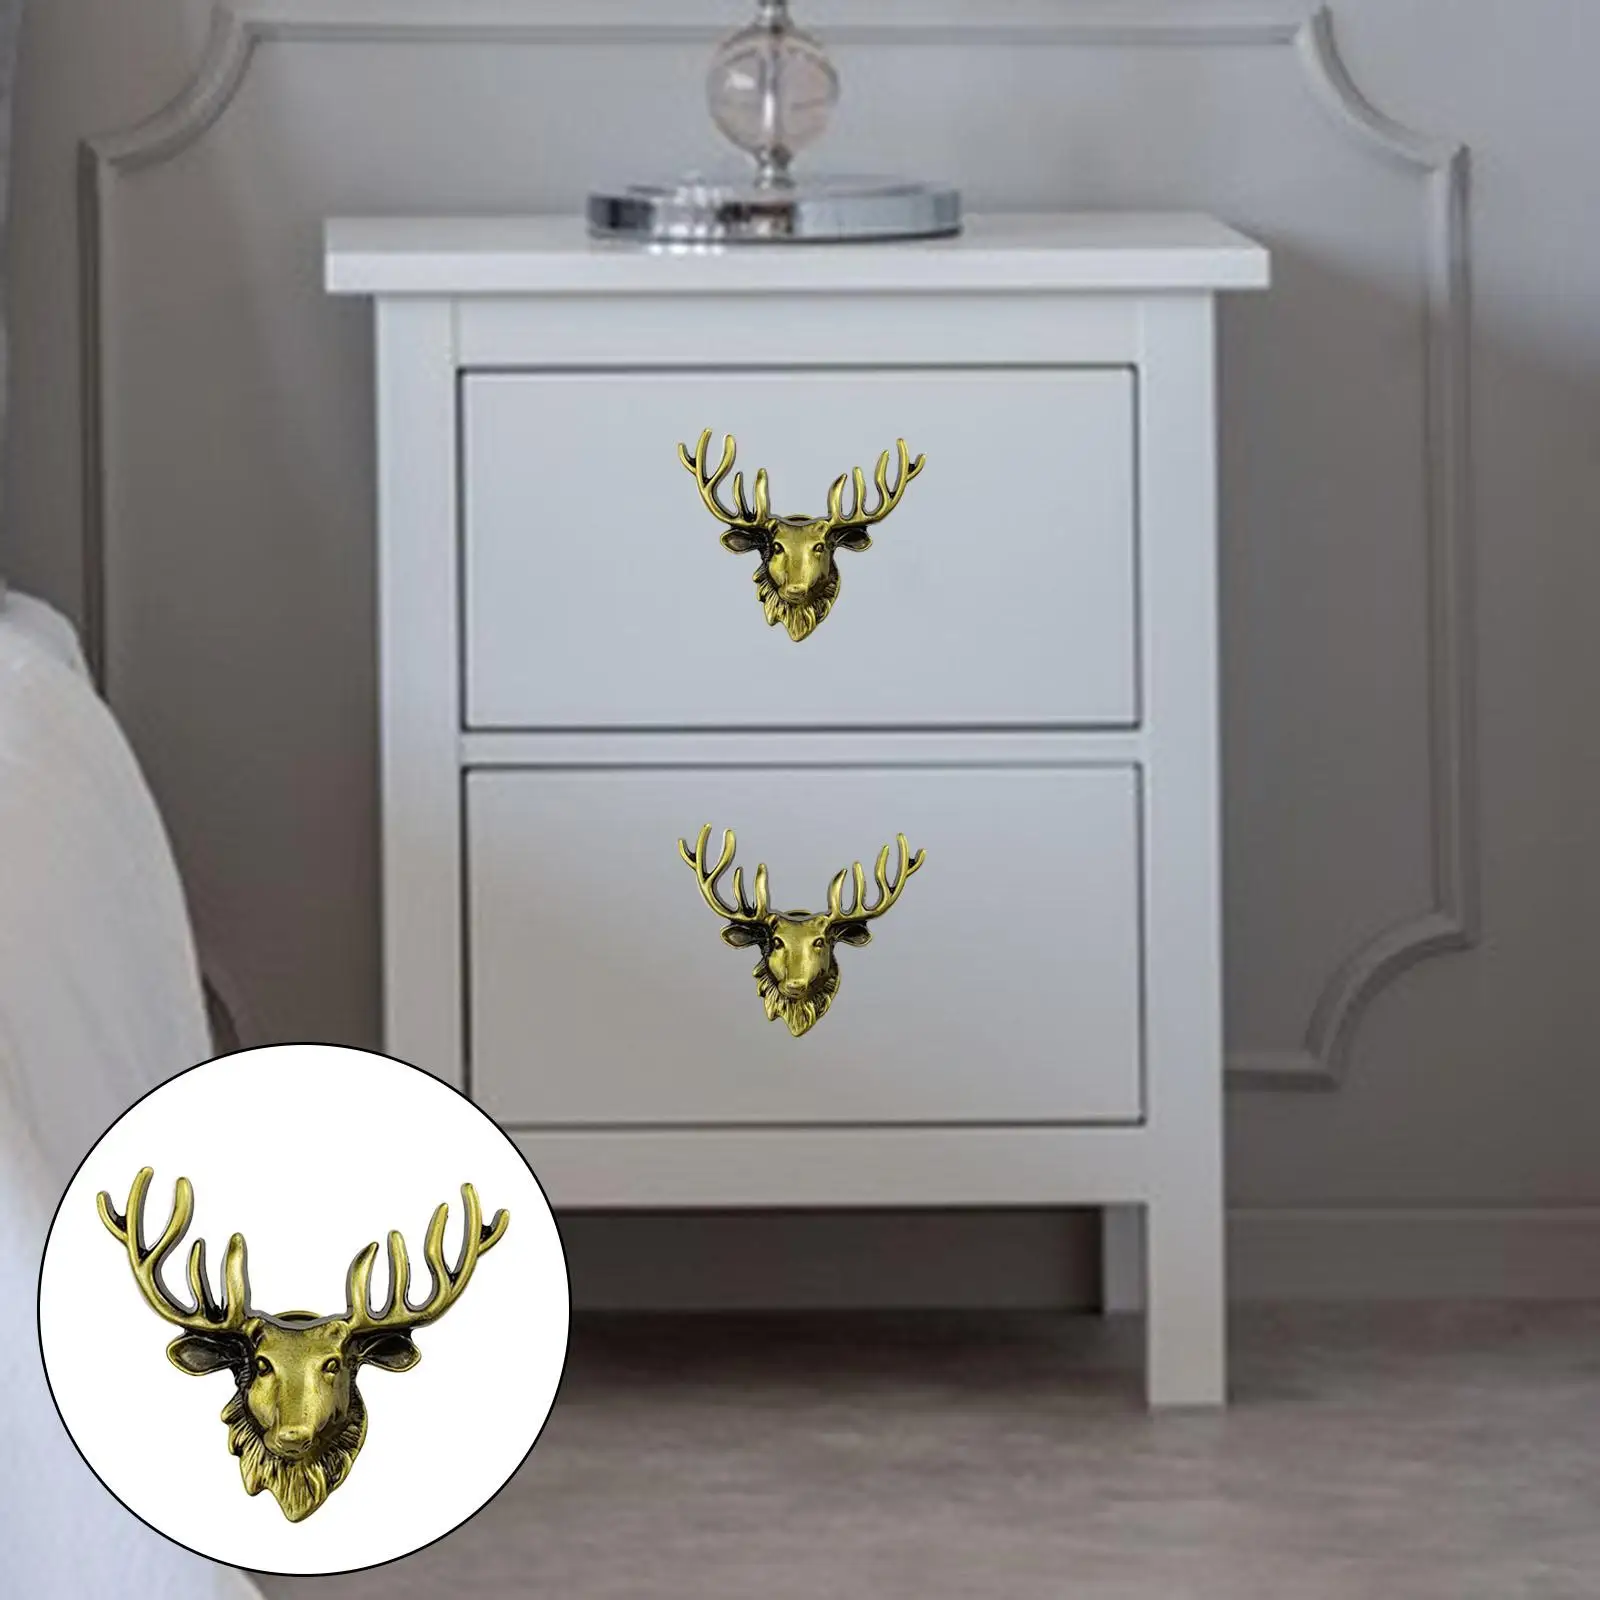 Modern Dresser Knobs Knob Handle Deer Decorative Home Furniture Metal Cabinet Knobs Knobs Pull for Wardrobe Bookcase Kitchen